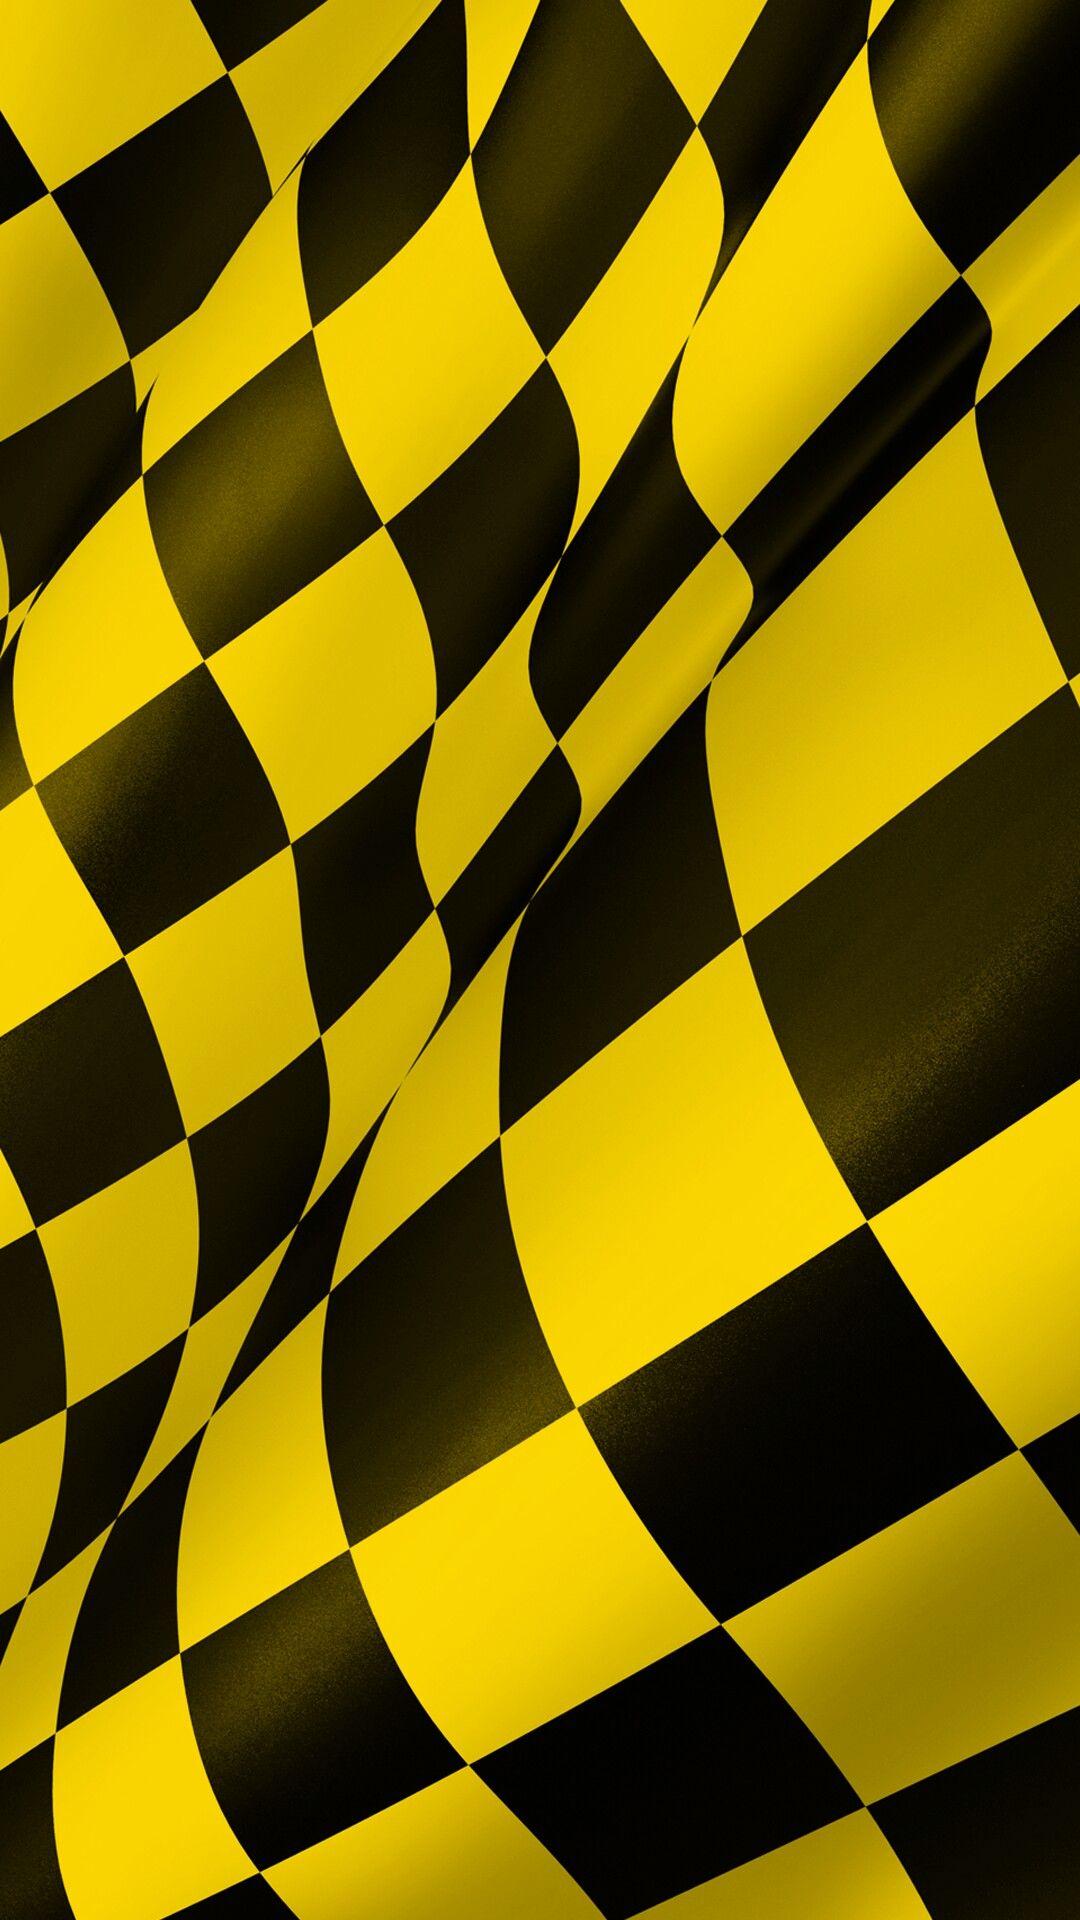 47 Checkered Flag Wallpaper  WallpaperSafari